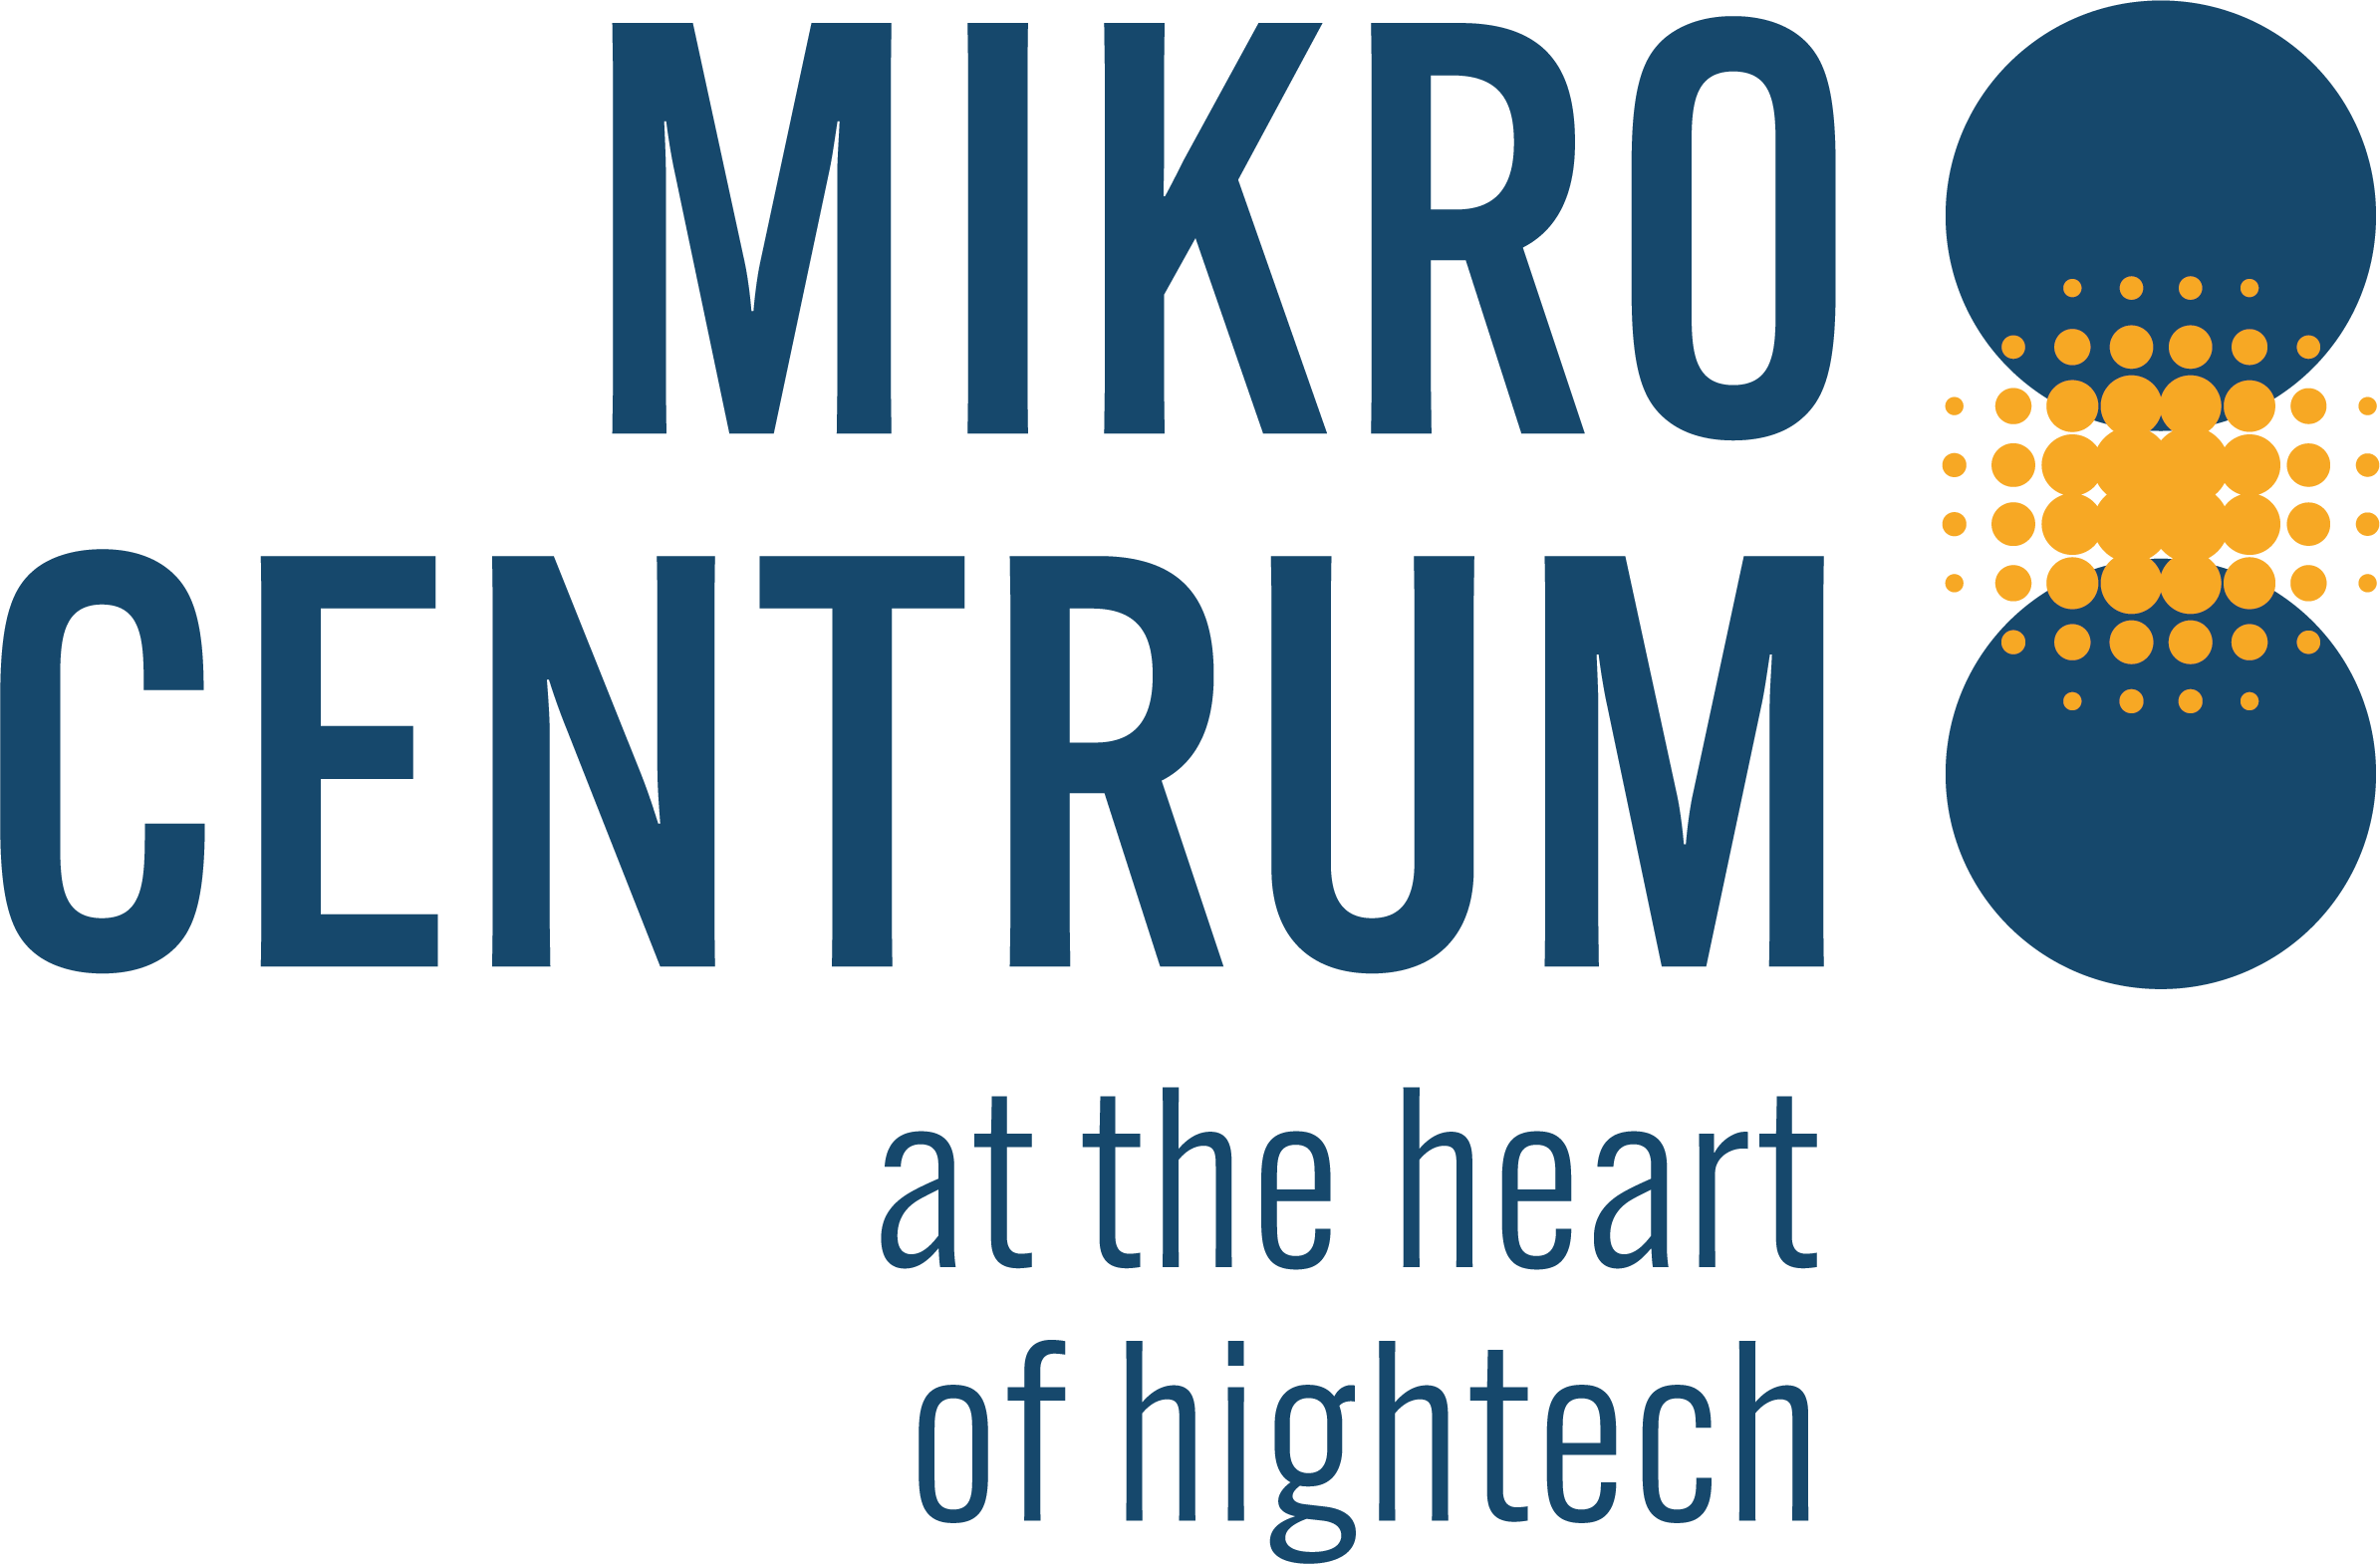 Mikrocentrum CMYK logo_DEF.png